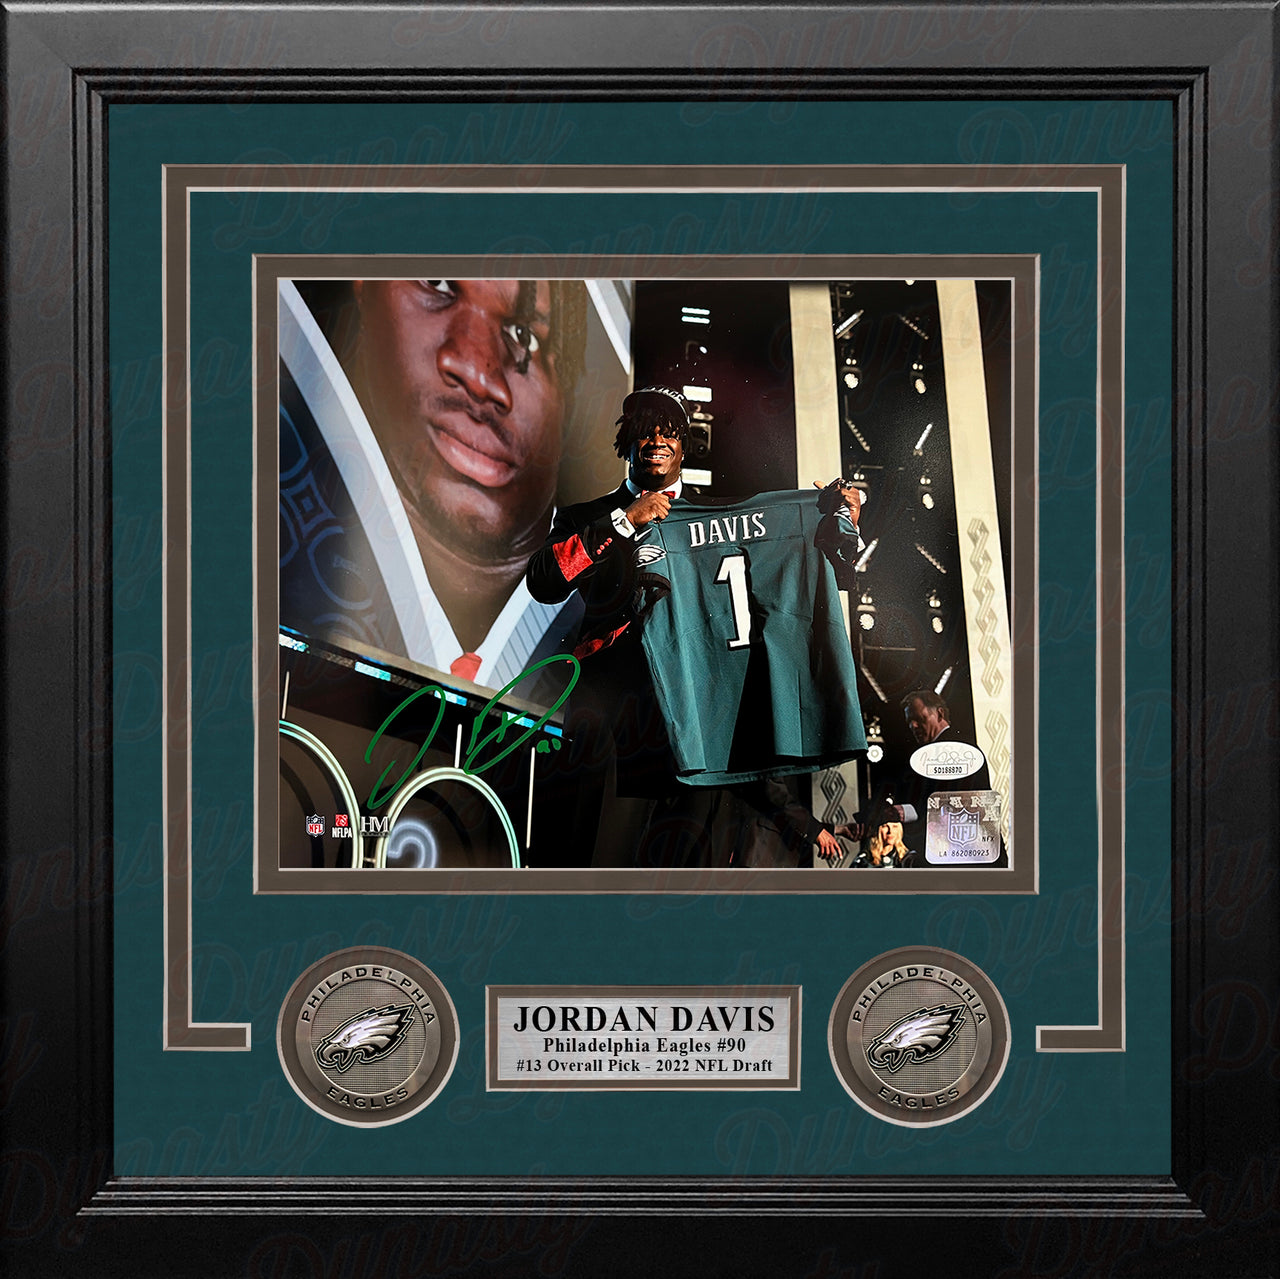 Jordan Davis Philadelphia Eagles Autographed Draft Night Framed Football Photo - Dynasty Sports & Framing 